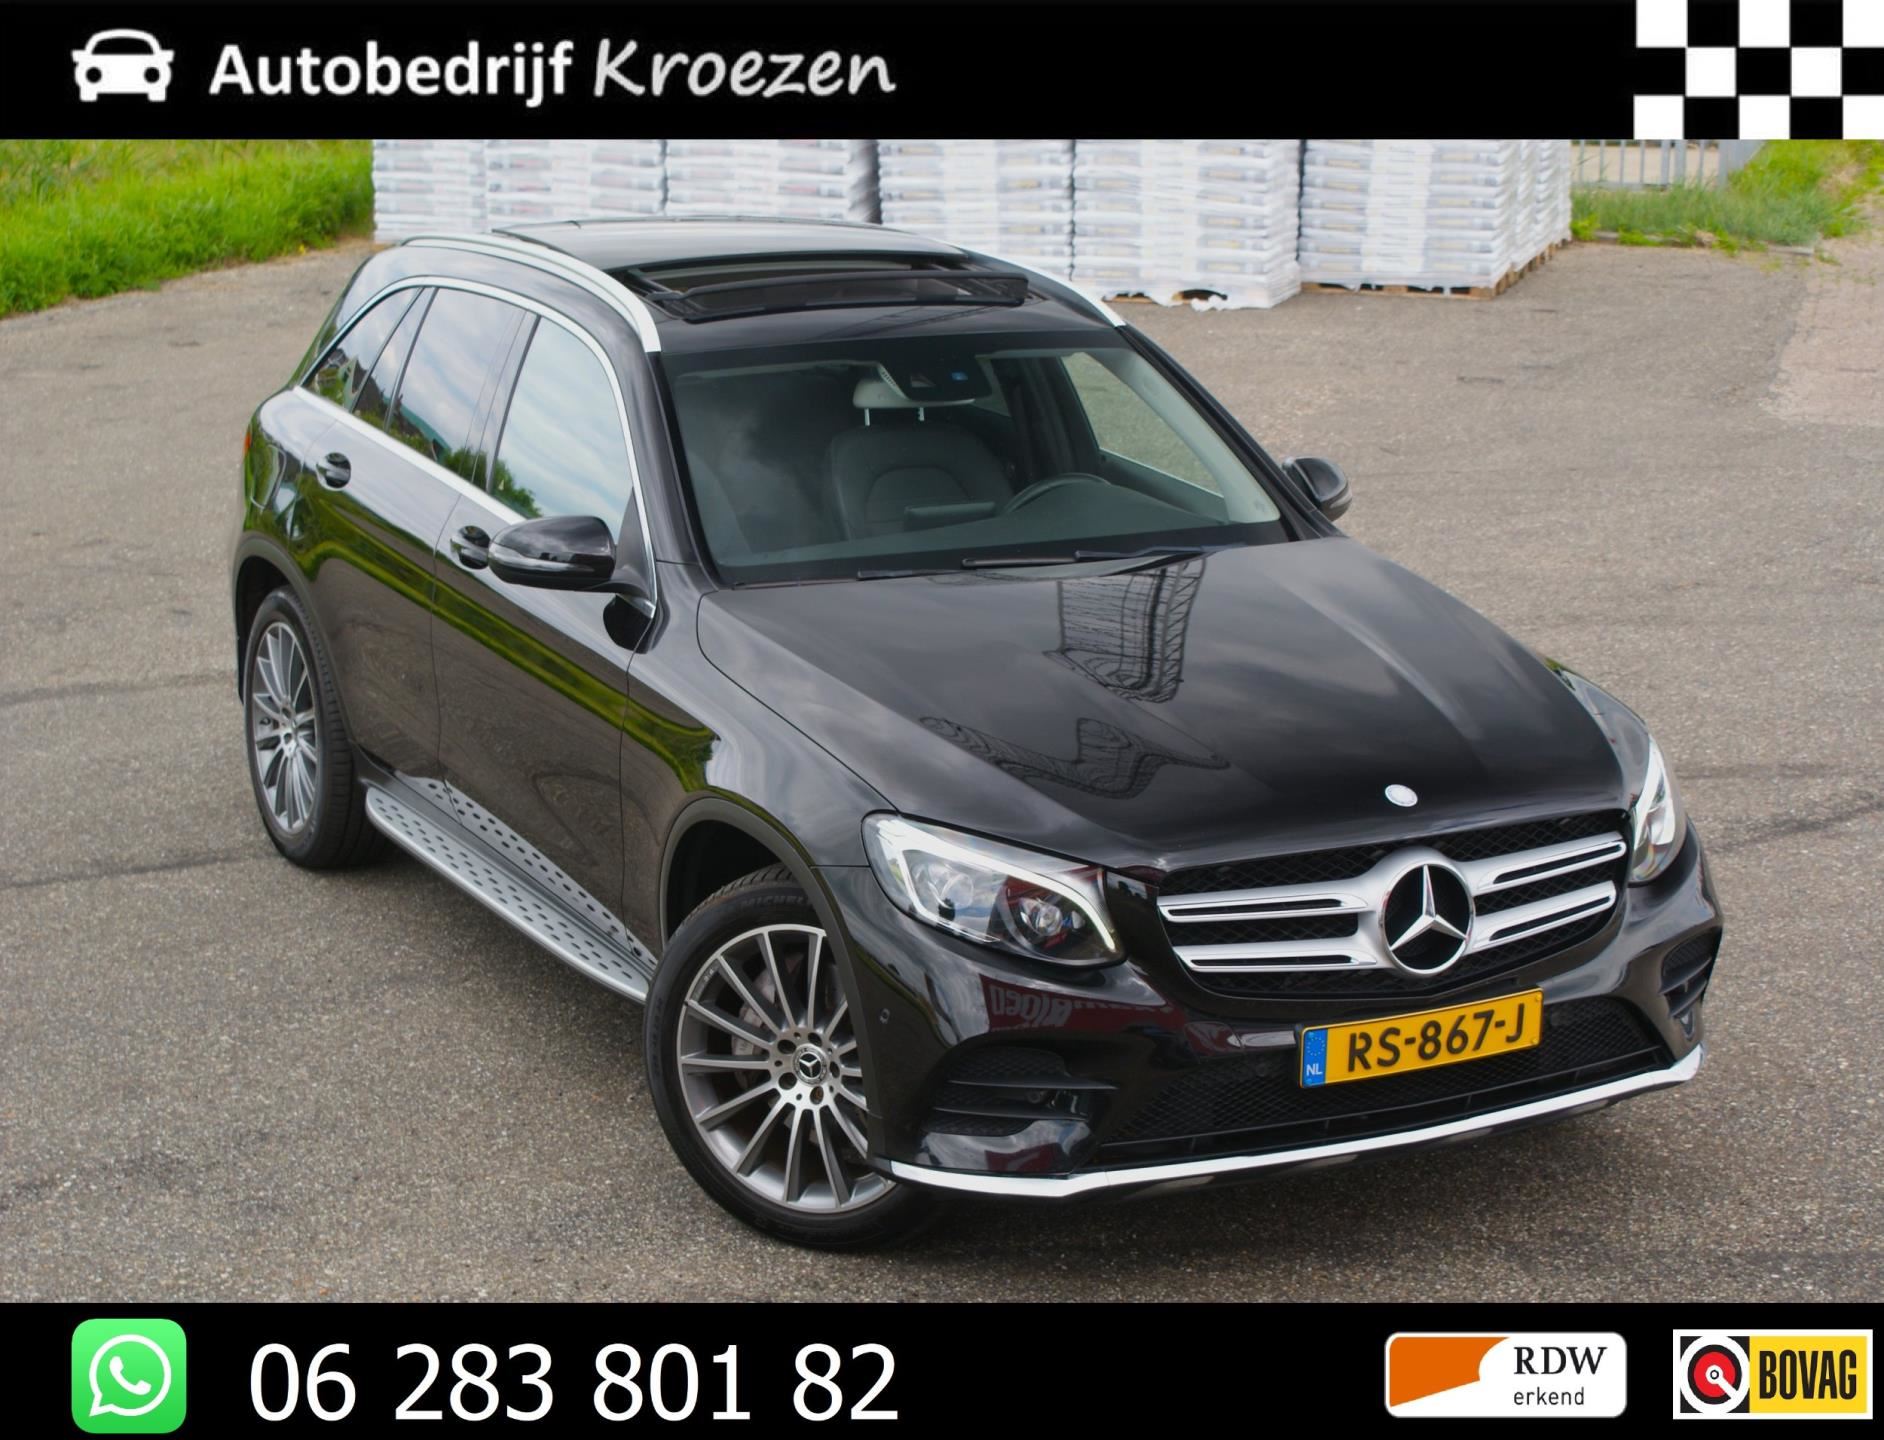 Mercedes-Benz GLC-klasse occasion - Autobedrijf Kroezen